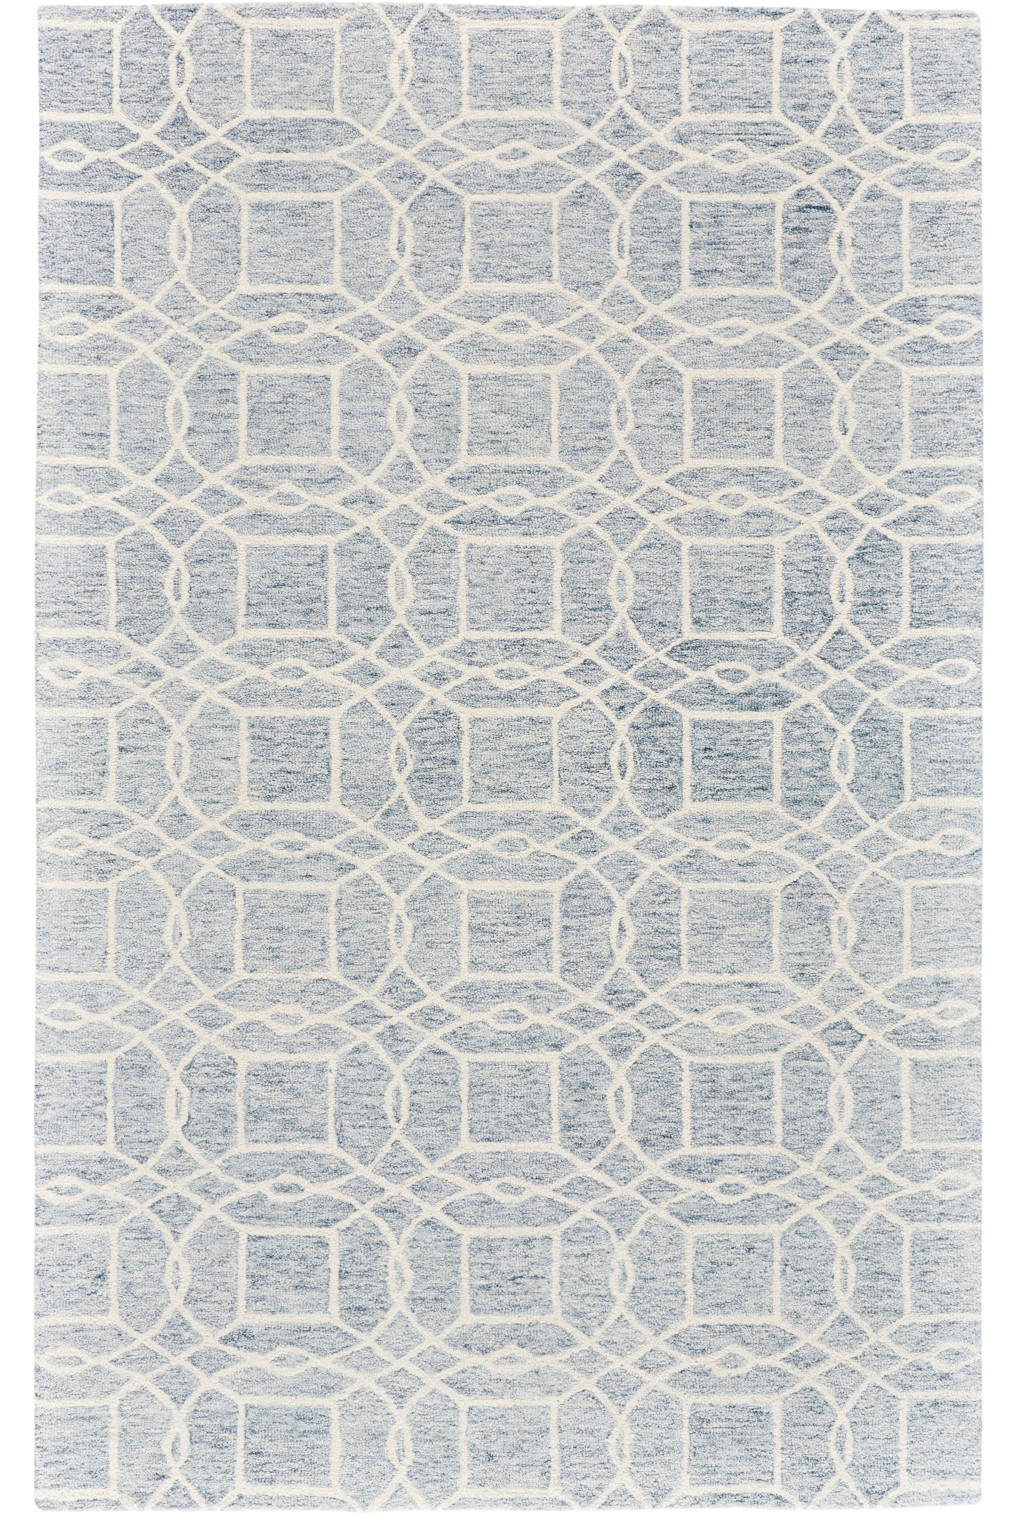 9' X 12' Gray And Ivory Wool Geometric Tufted Handmade Area Rug-512178-1